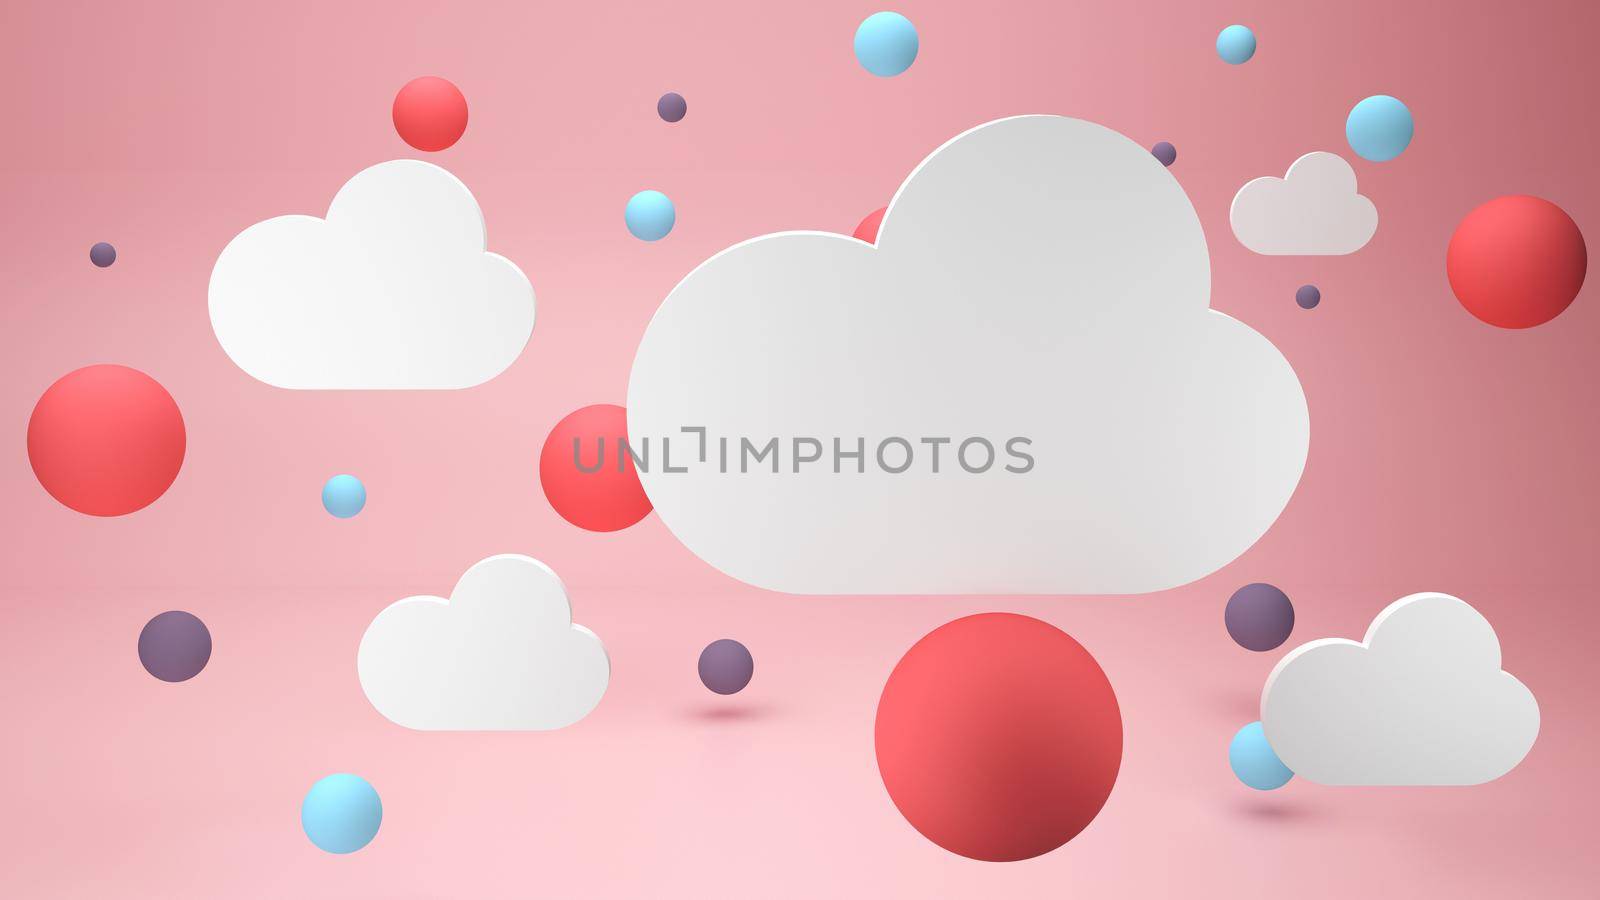 Cute clouds on pink background 3d render illustration